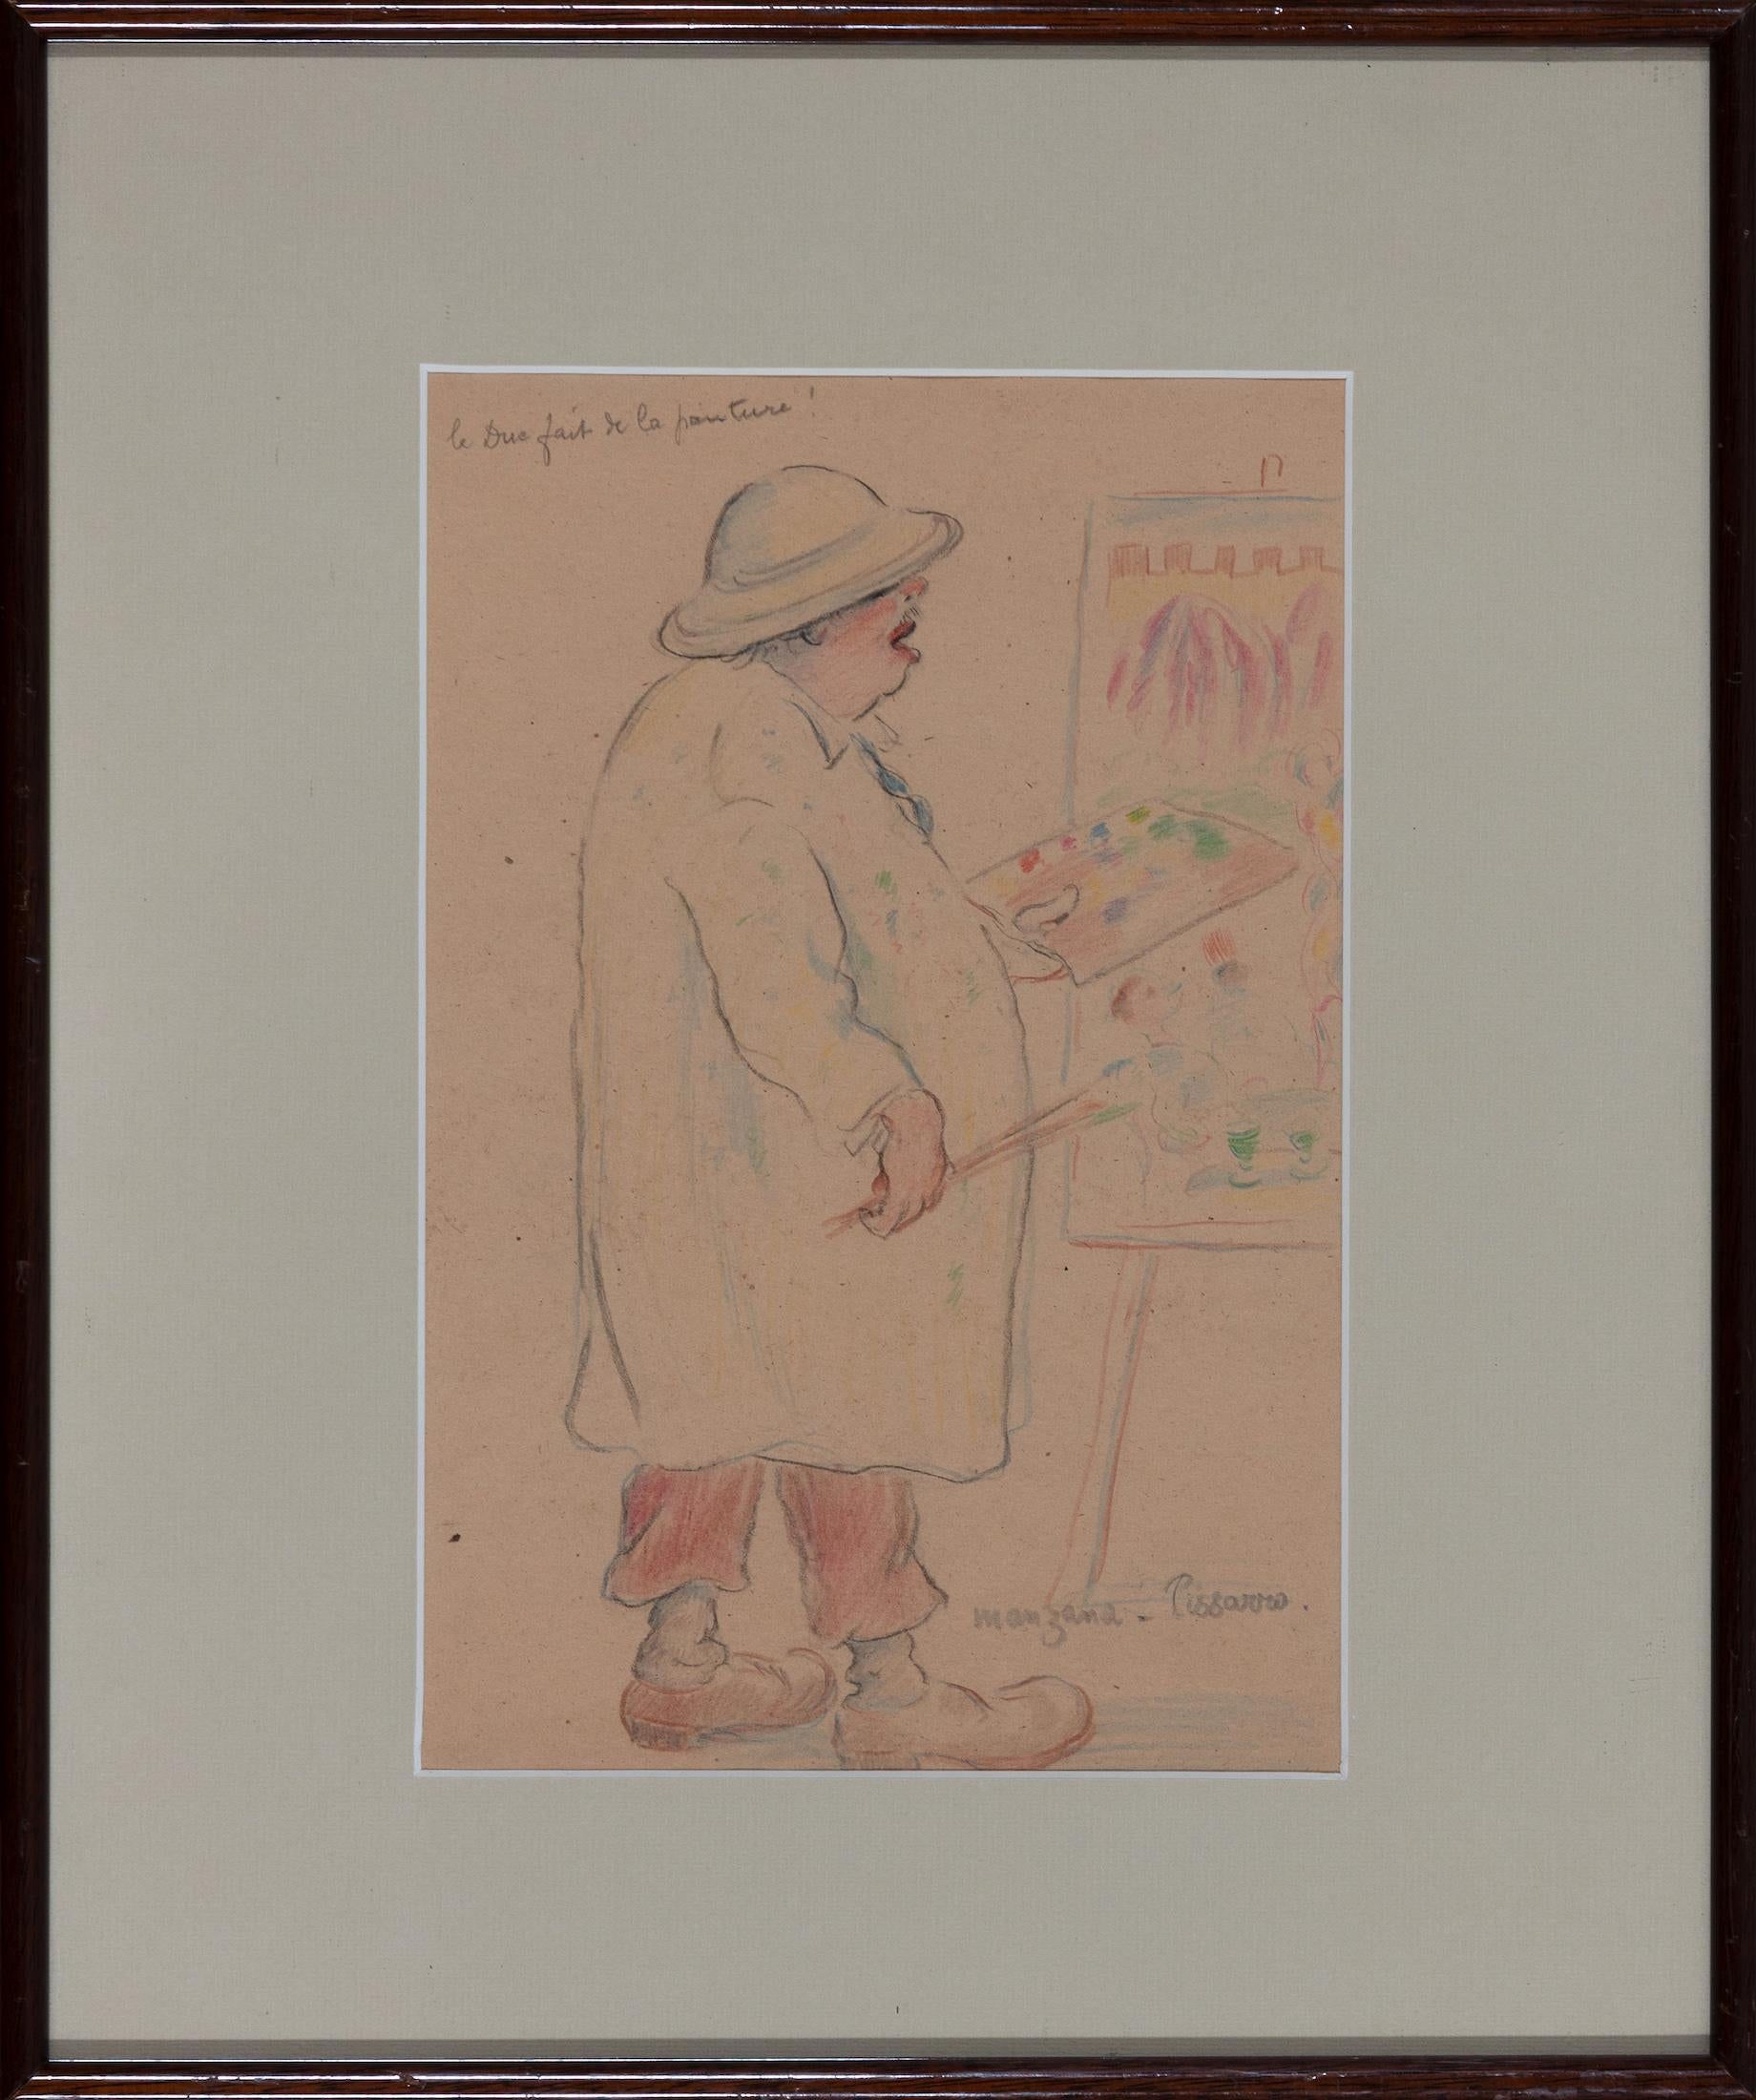 Le Due Fait de la Peinture de Georges Manzana Pissarro - dessin coloré - Art de Georges Henri Manzana Pissarro